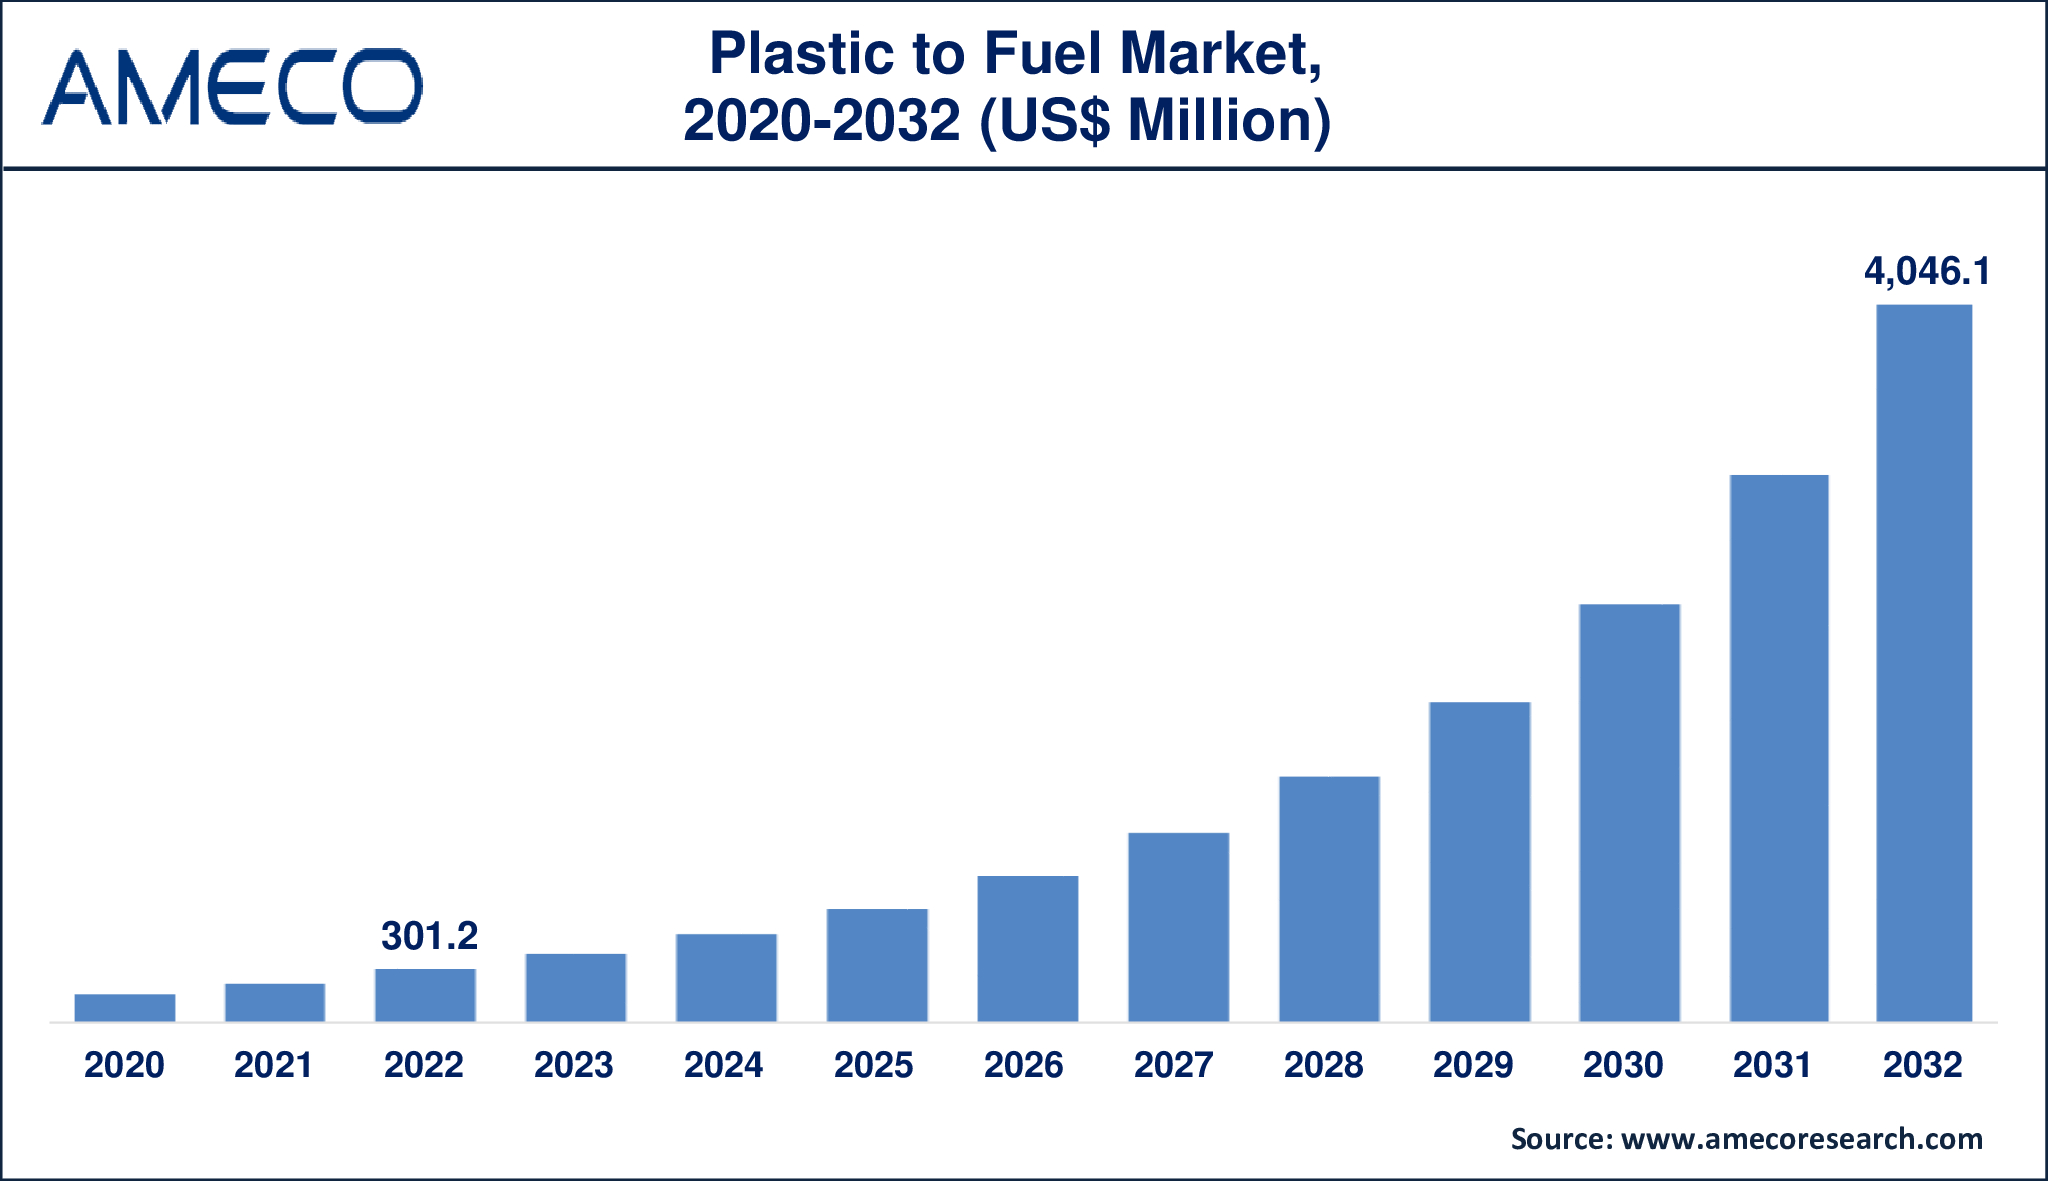 Plastic to Fuel Market Dynamics